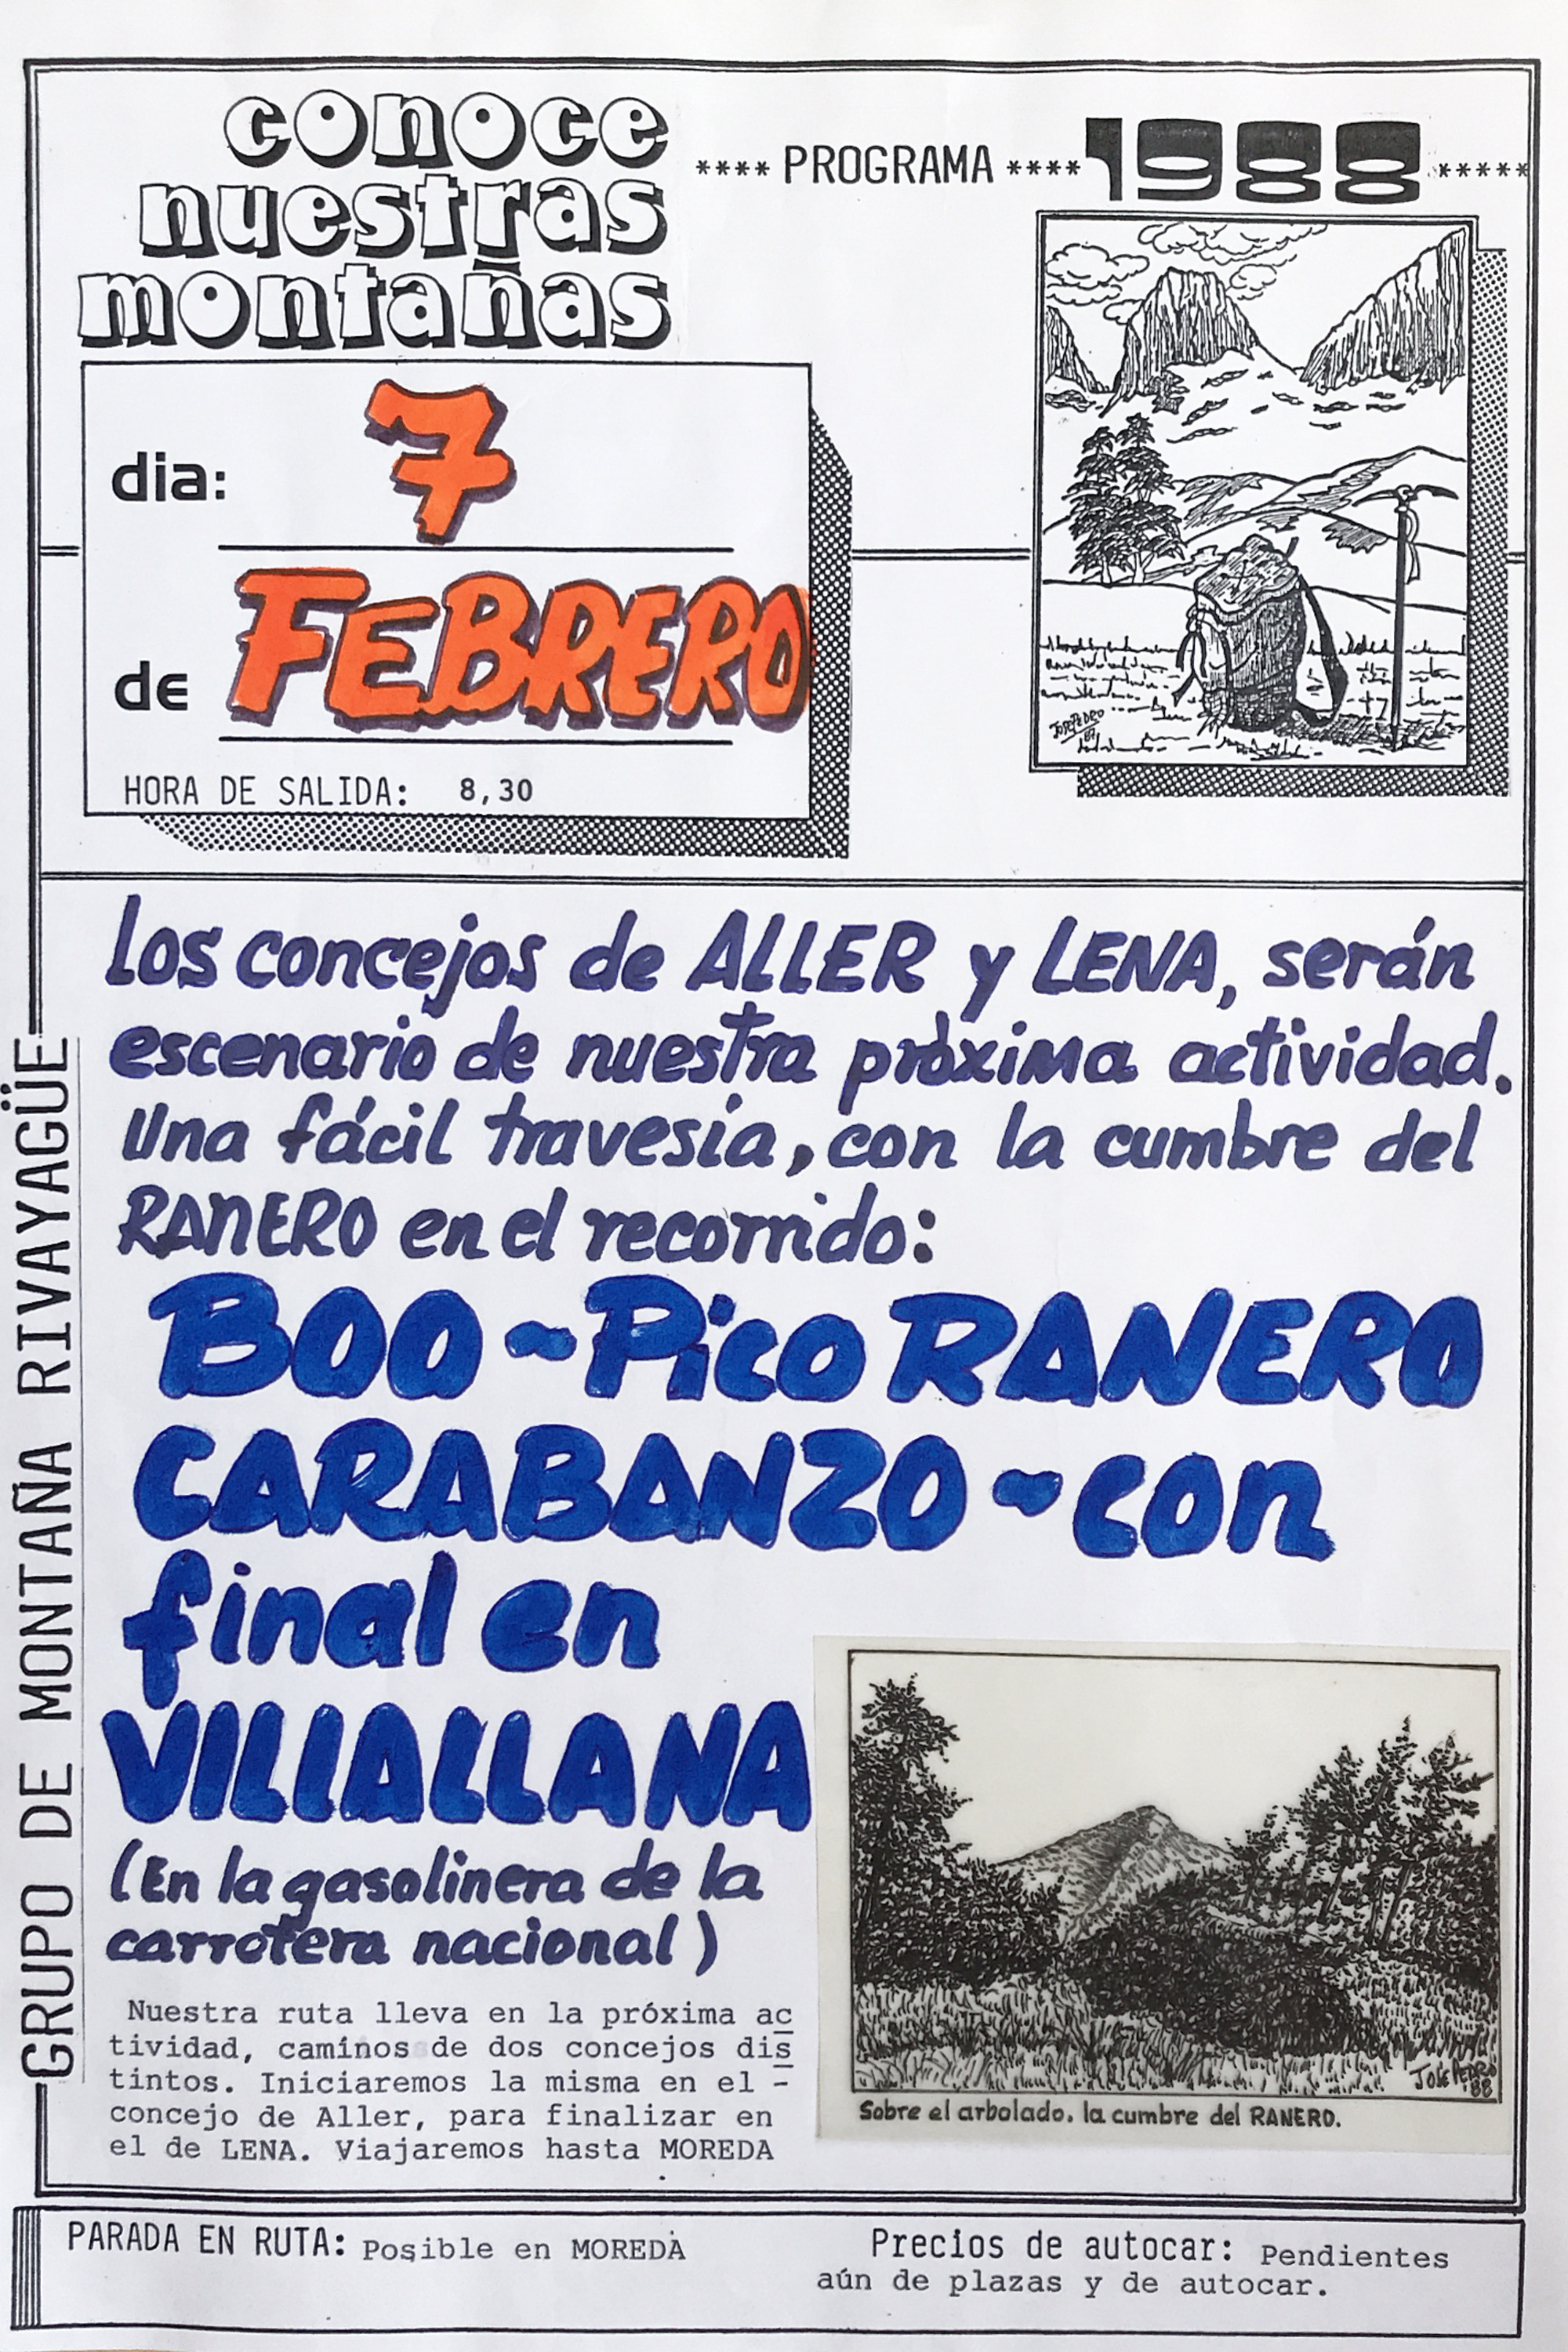 7 febrero, 1988: Pico Ranero